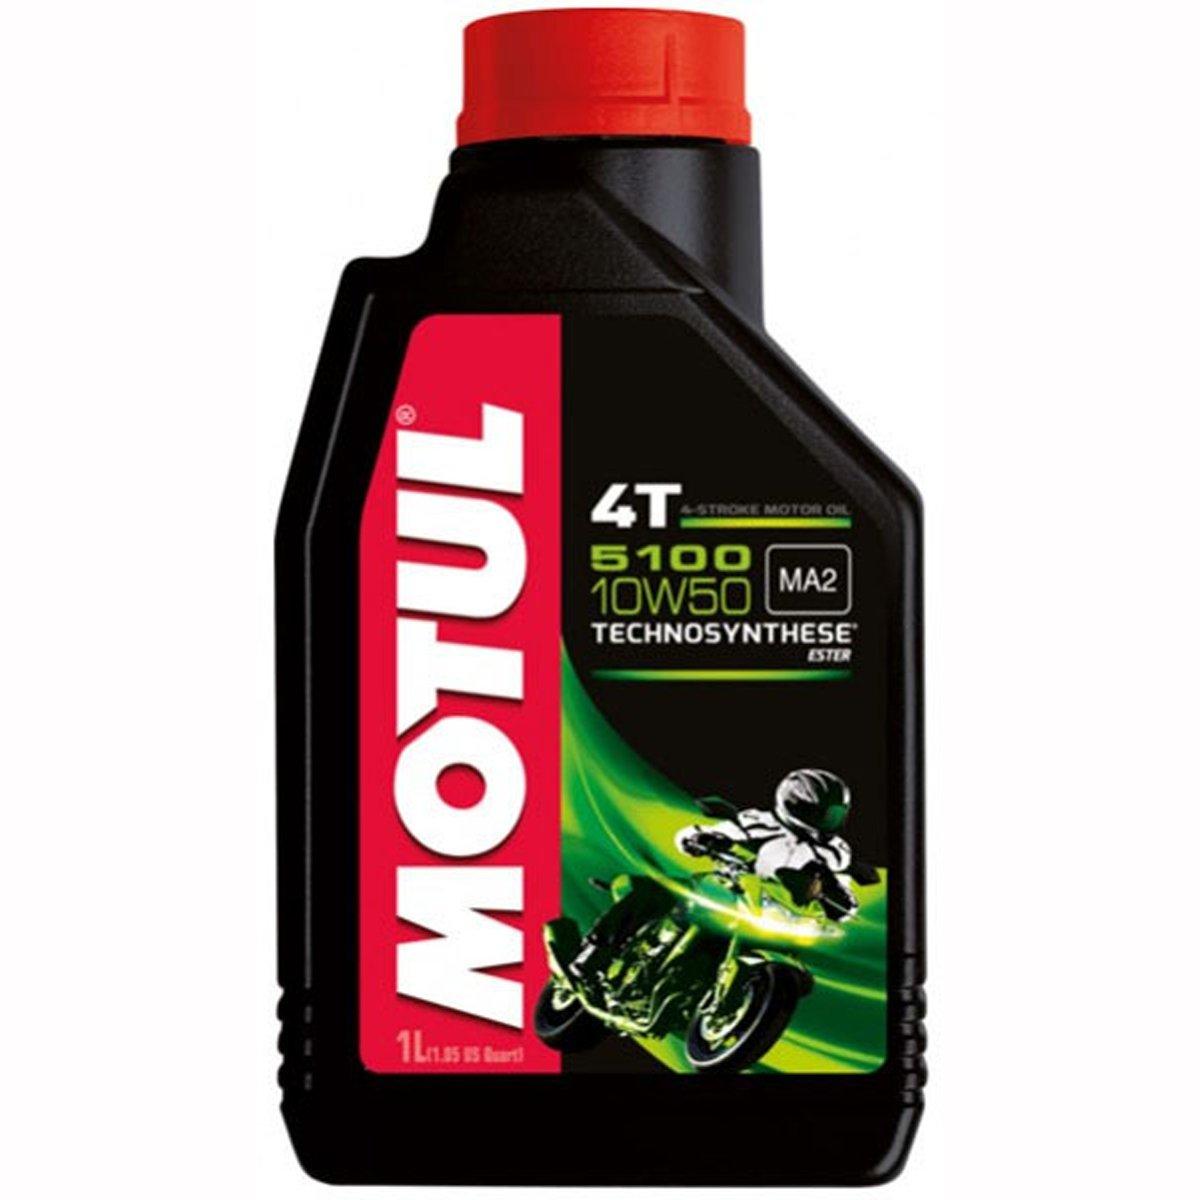 Motul Semi-Synthetic 5100 10W50 4T Oil - Black - Browse our range of Care: Oils & Liquids - getgearedshop 